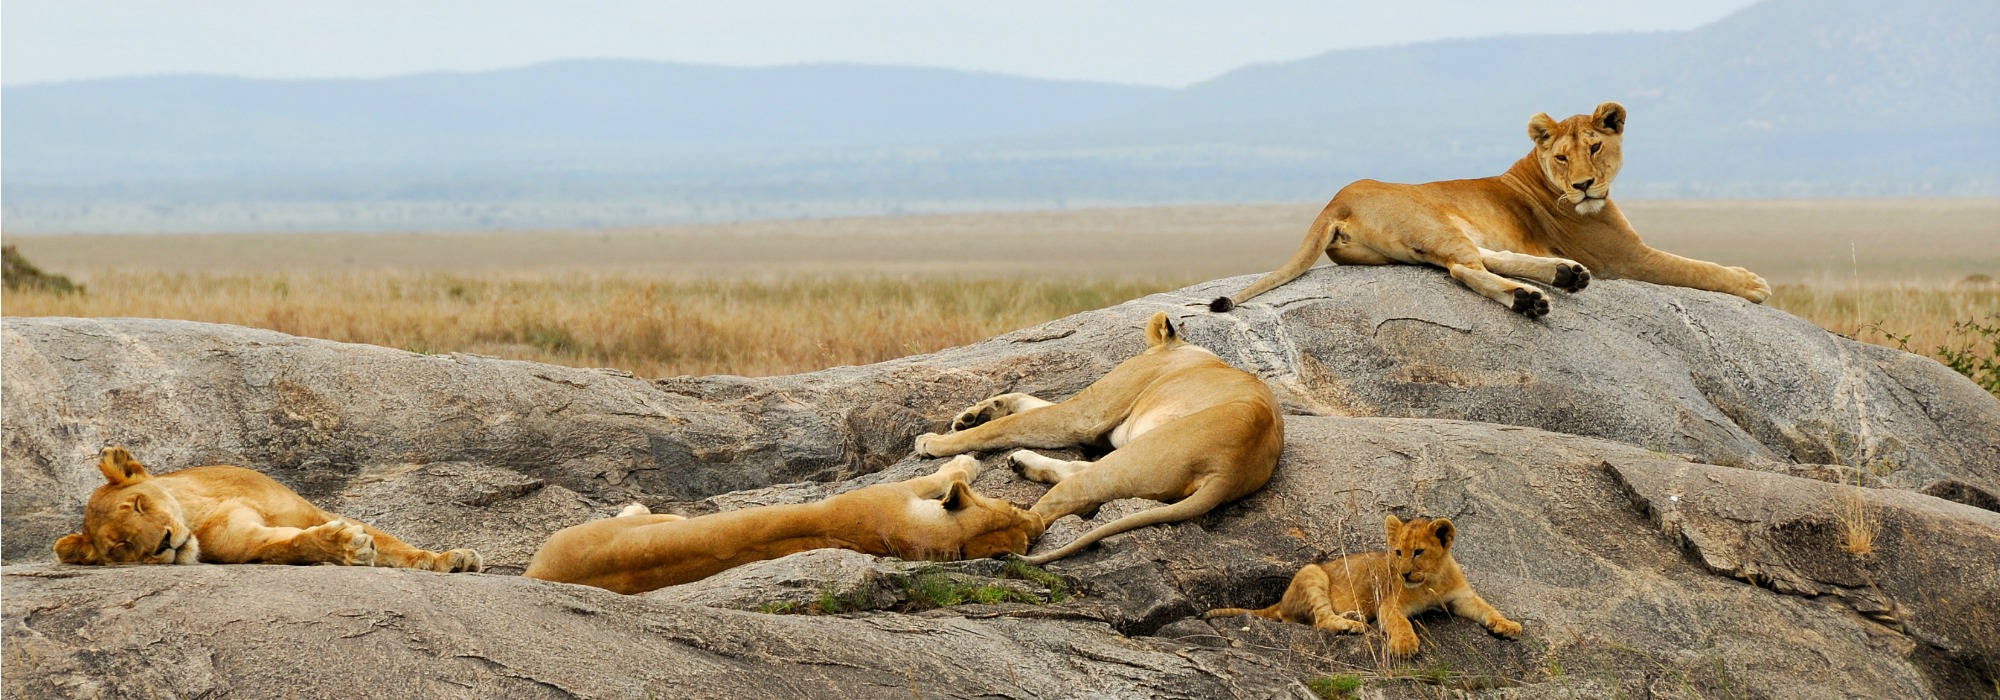 Lions in Botswana-700